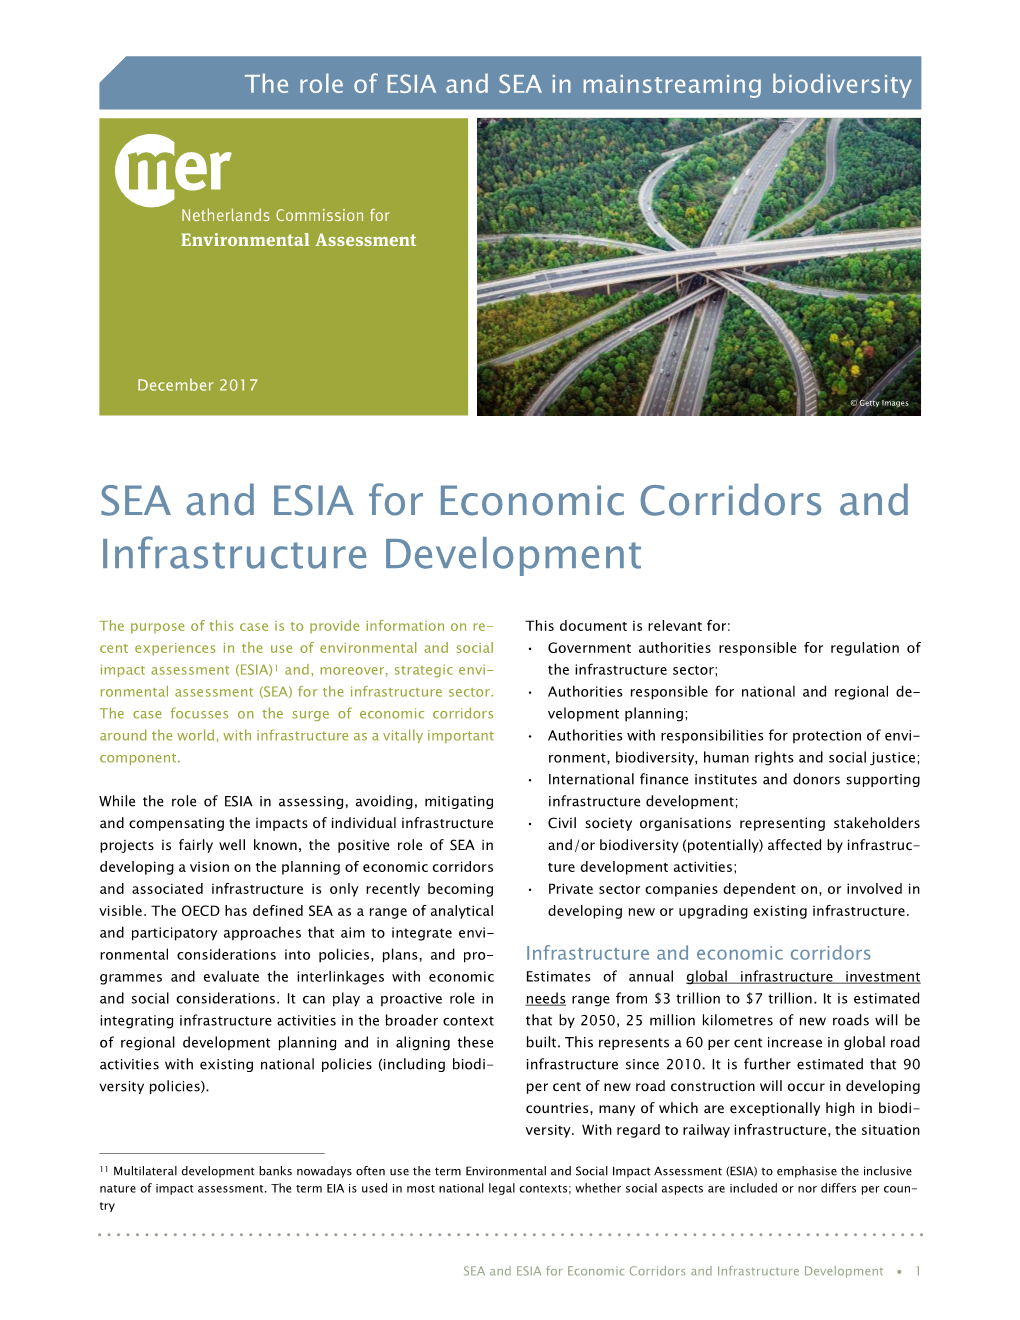 SEA and ESIA for Economic Corridors and Infrastructure Development